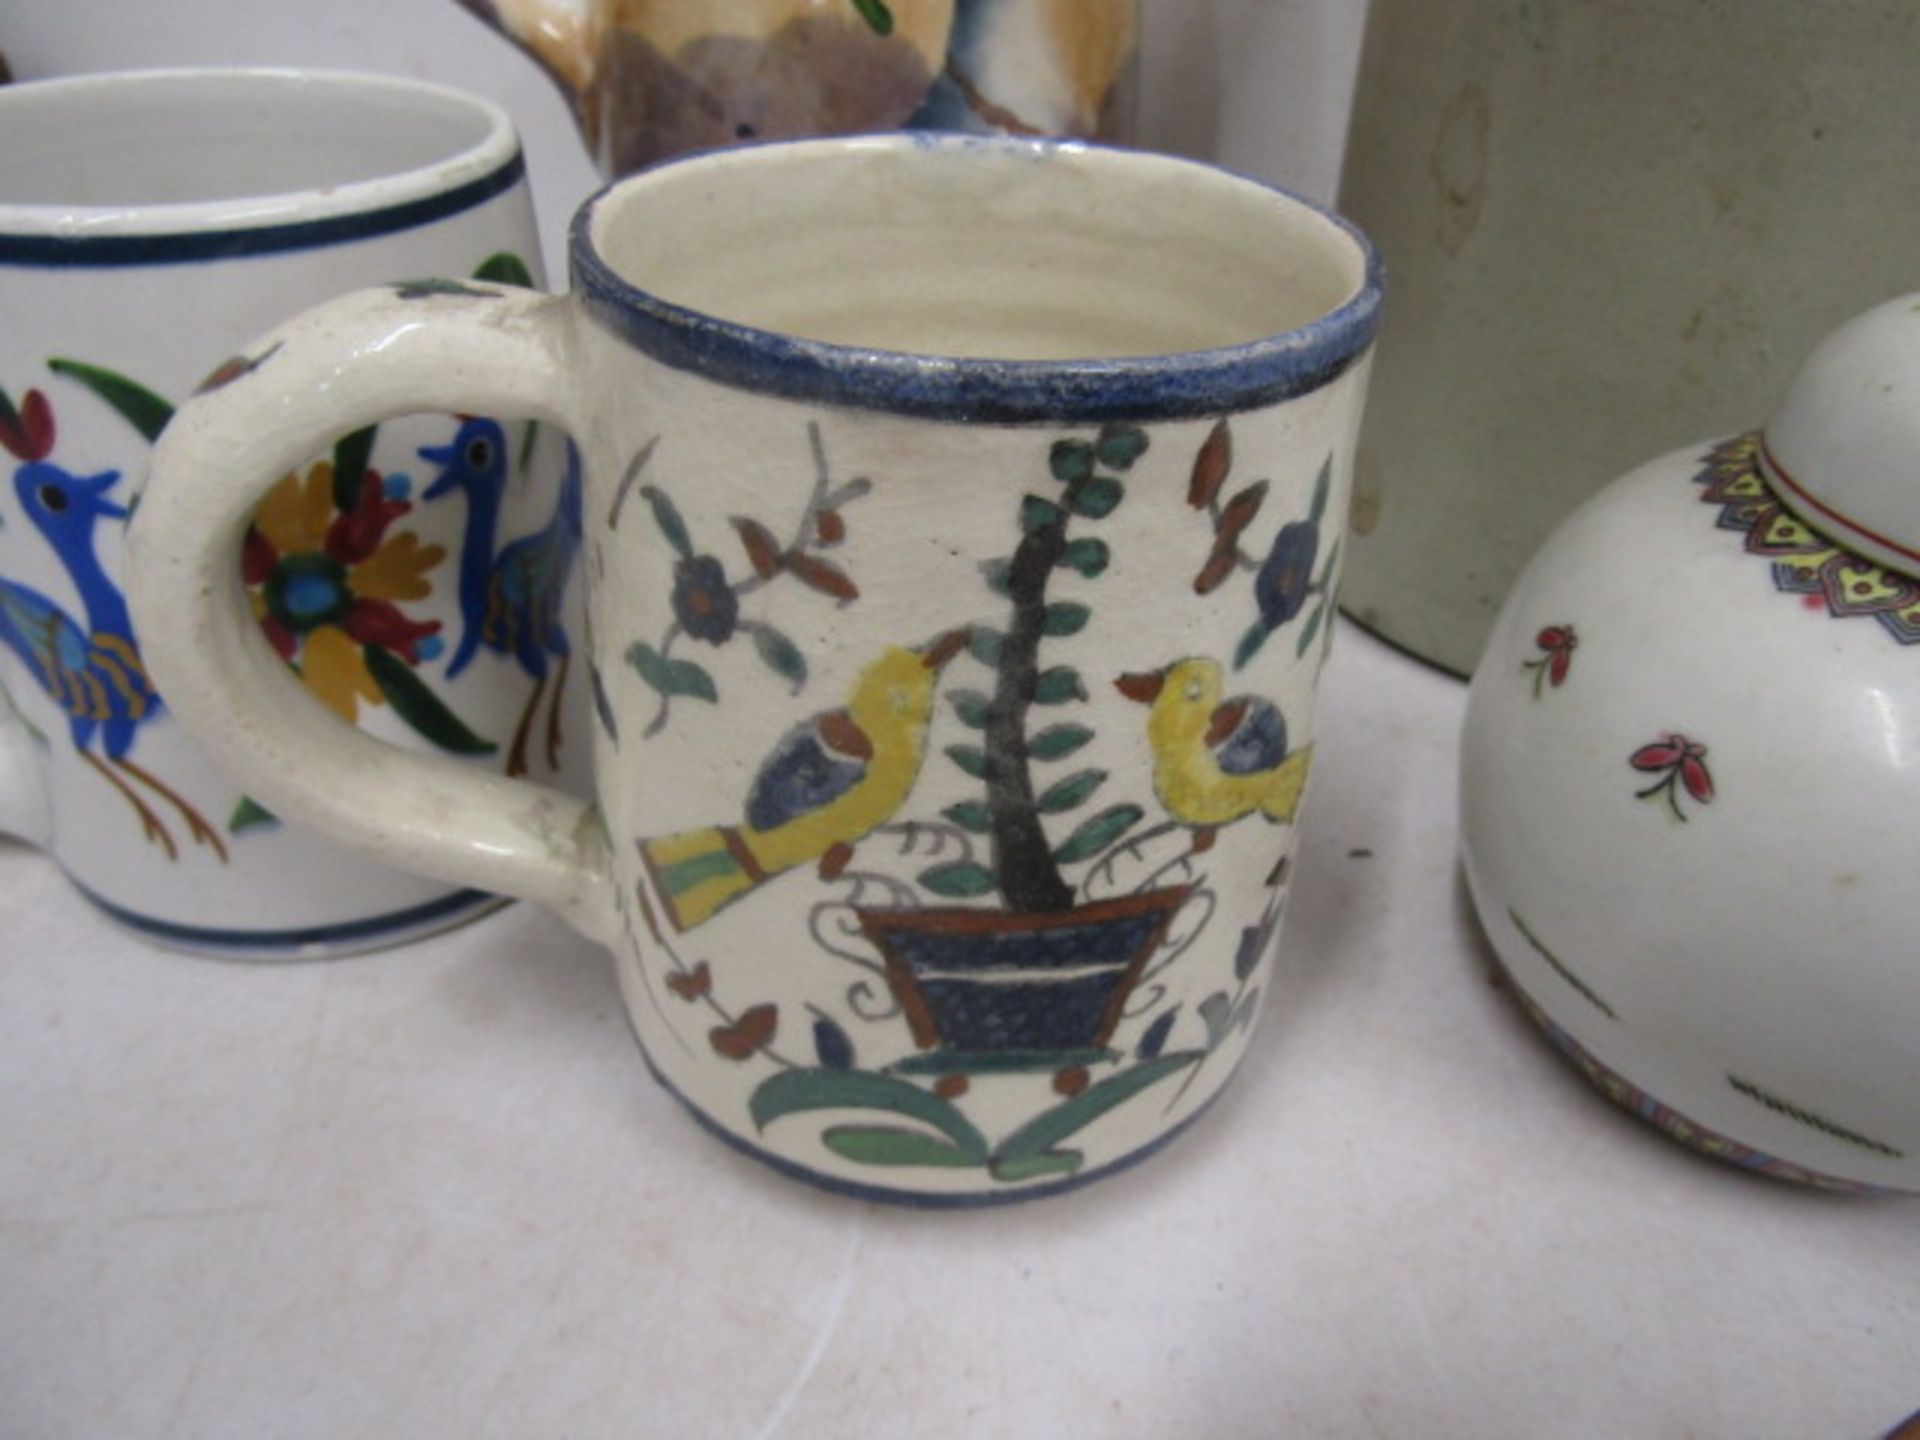 Palestine mug Chinese ginger jars and various jugs/ceramics - Image 2 of 6